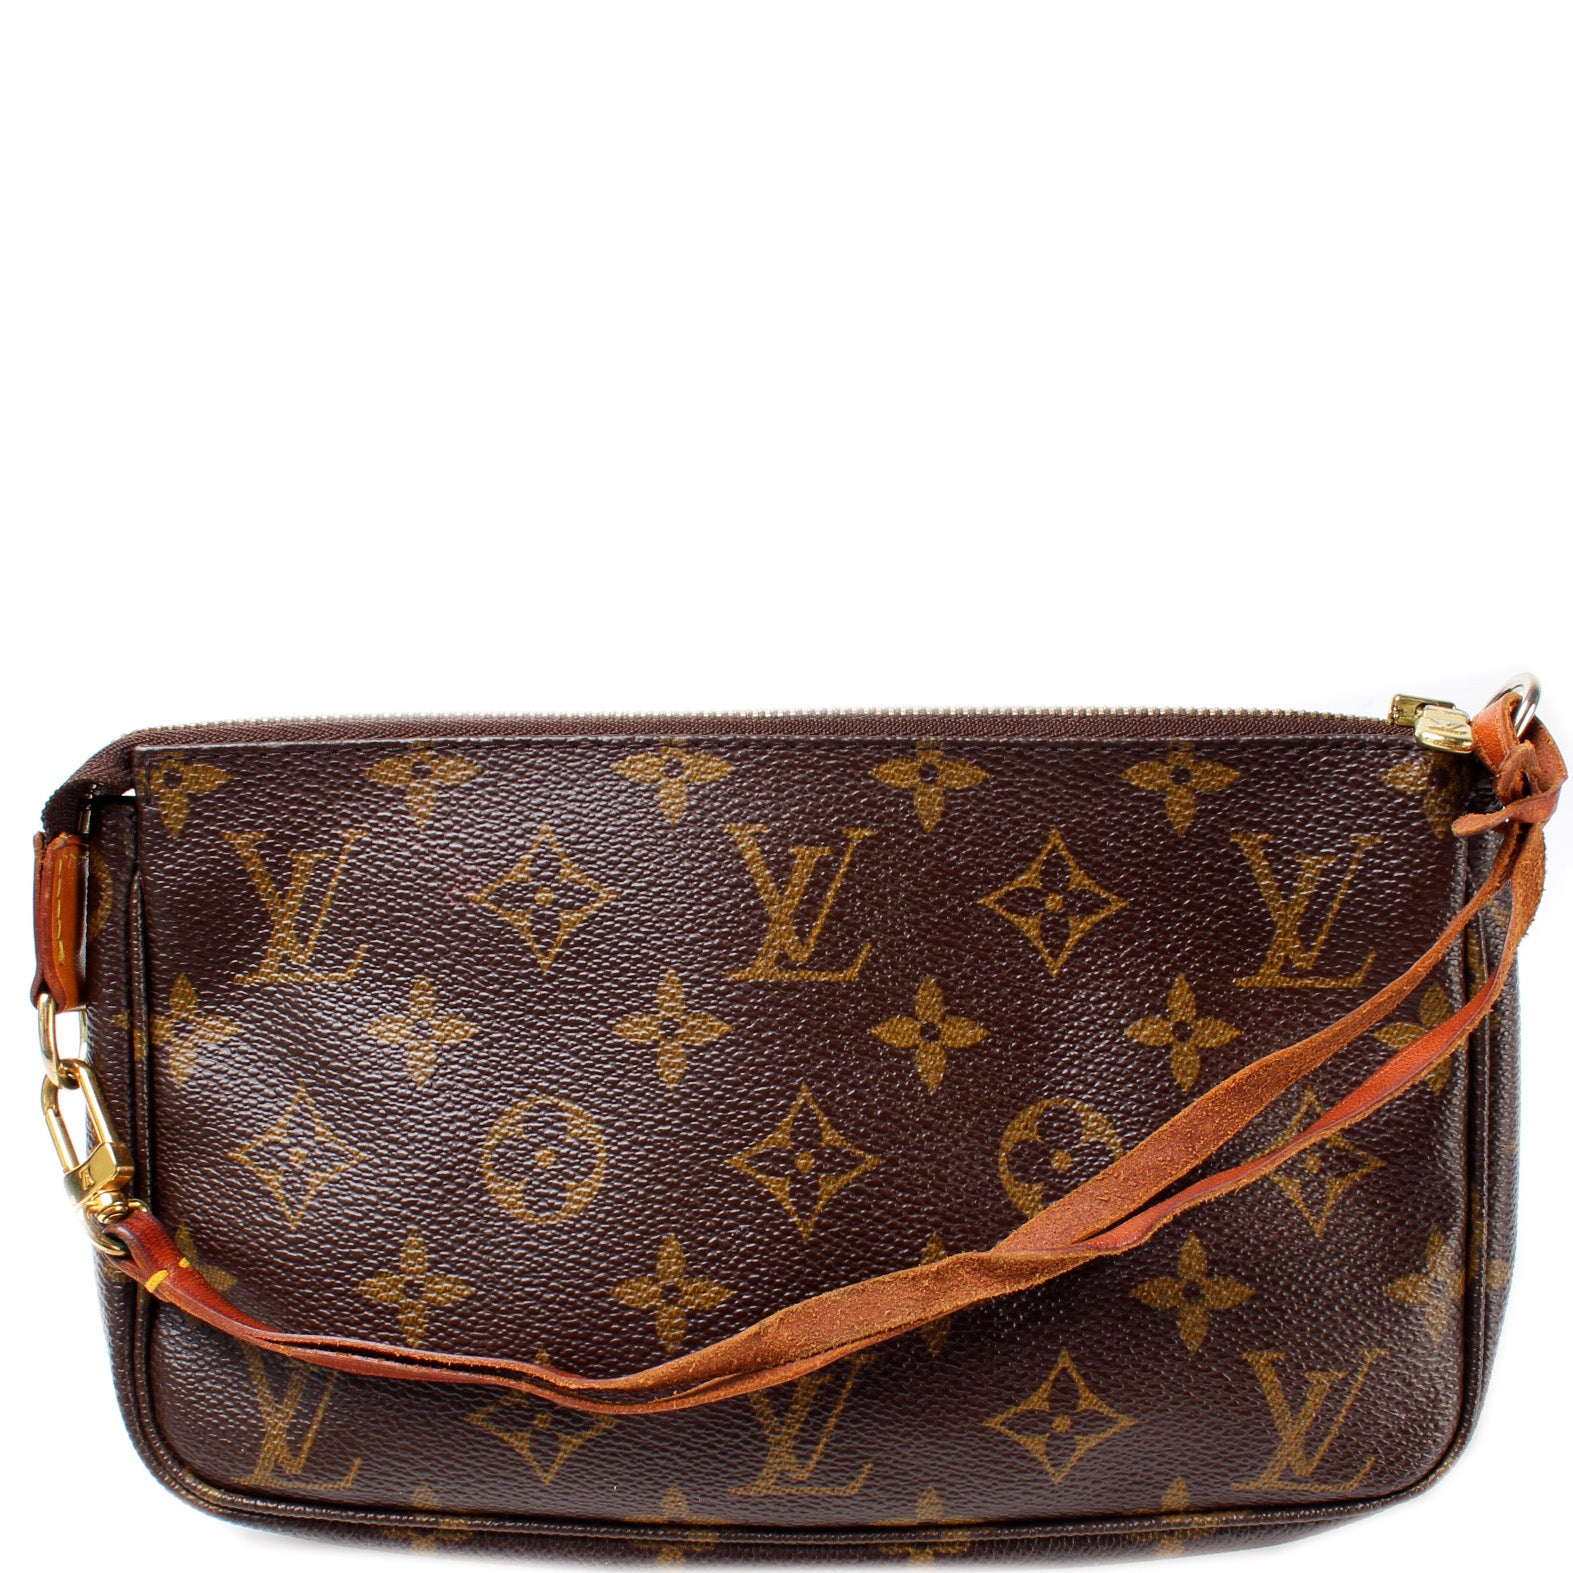 Louis Vuitton - Authenticated Pochette Accessoire Handbag - Leather Brown for Women, Very Good Condition